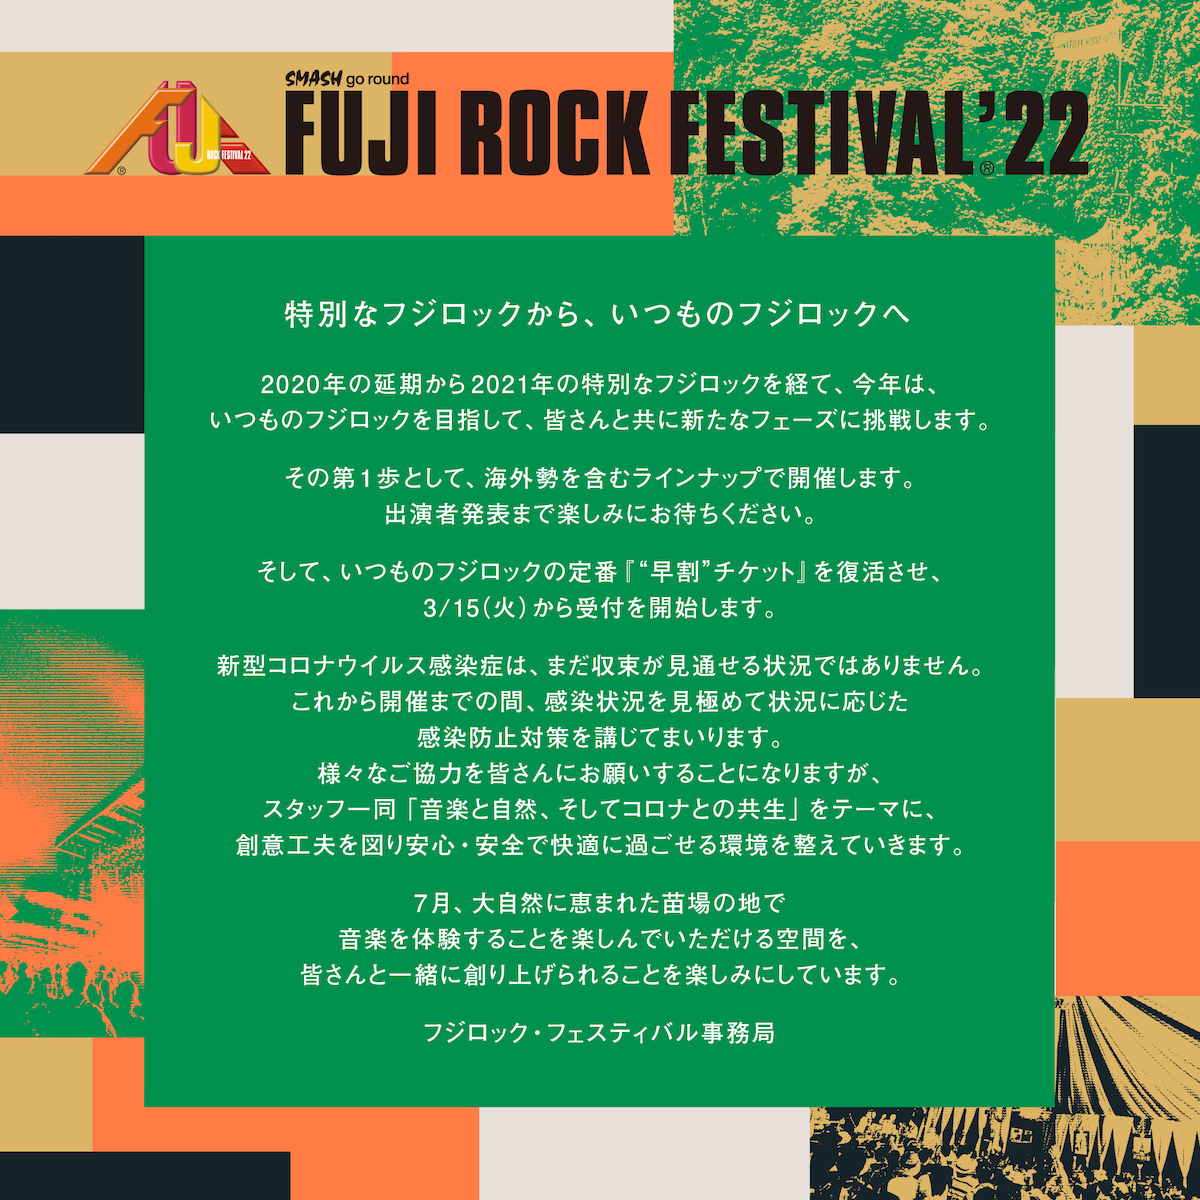 fujirock-2022-ticket_02 いよいよタイムテーブル公開！総勢162組のアーティストが集まるフジロック ’22開催まで残り4週間 #fujirock